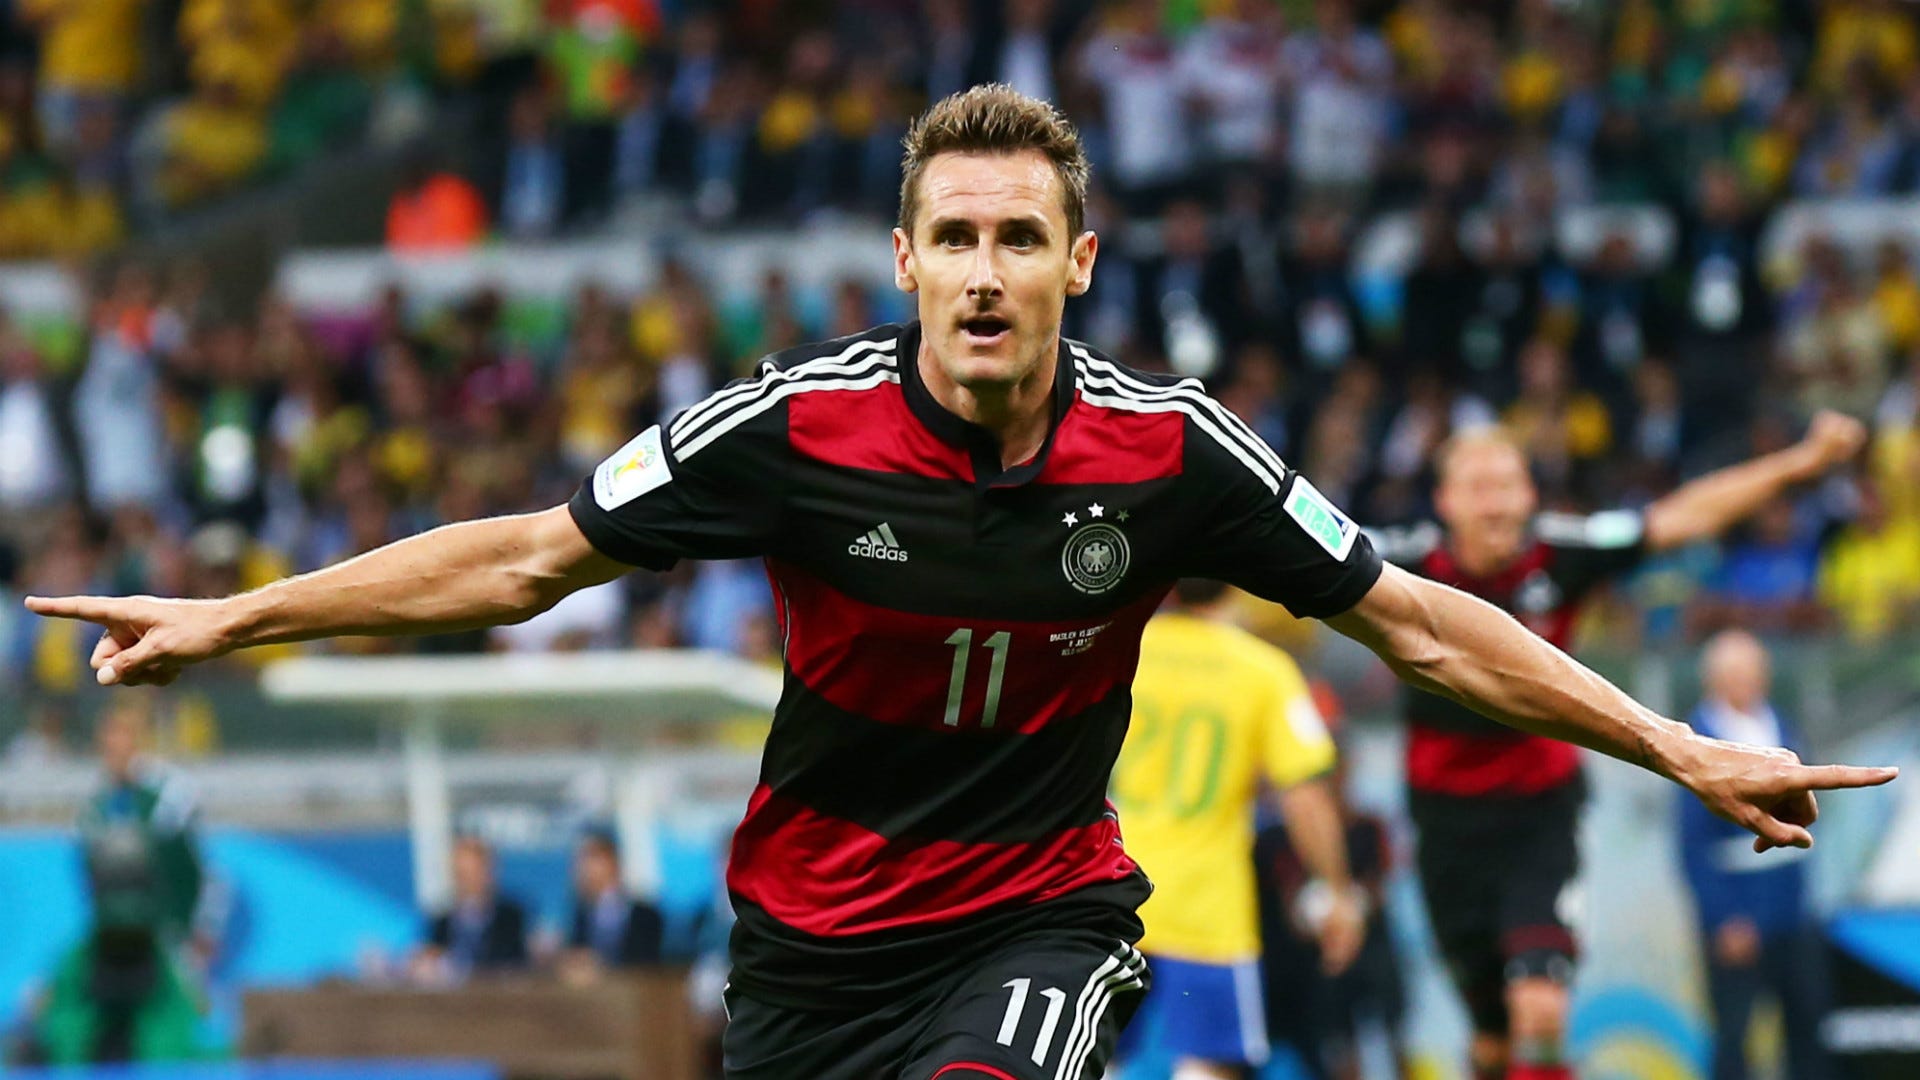 Miroslav Klose Germany Brazil